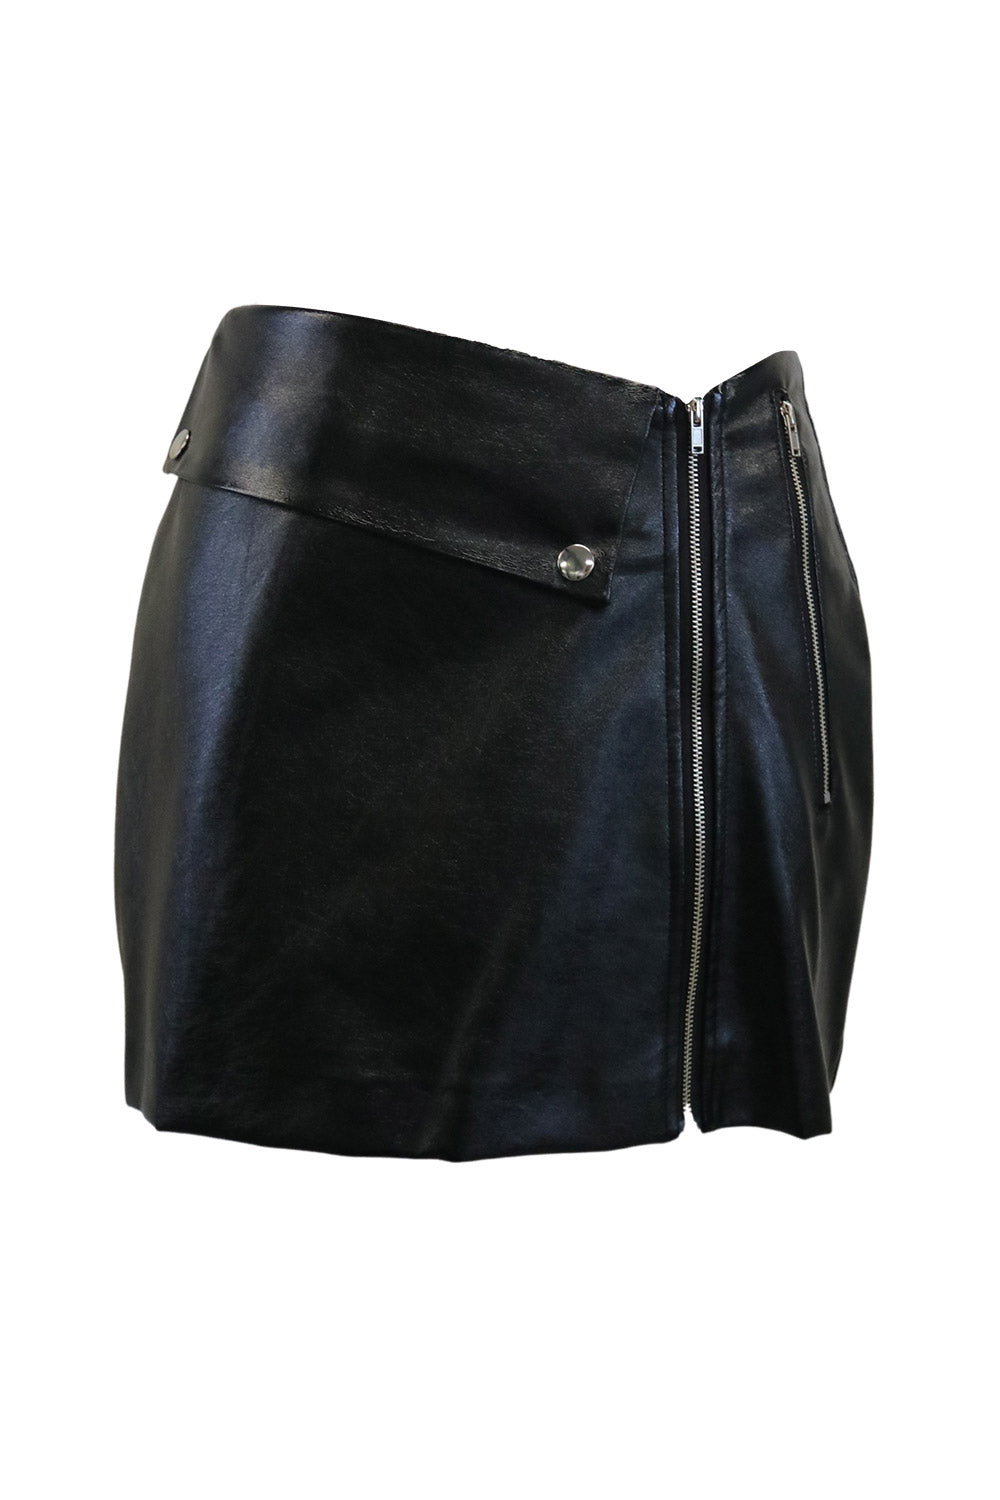 storets.com Rae Asymmetric Pleather Skirt